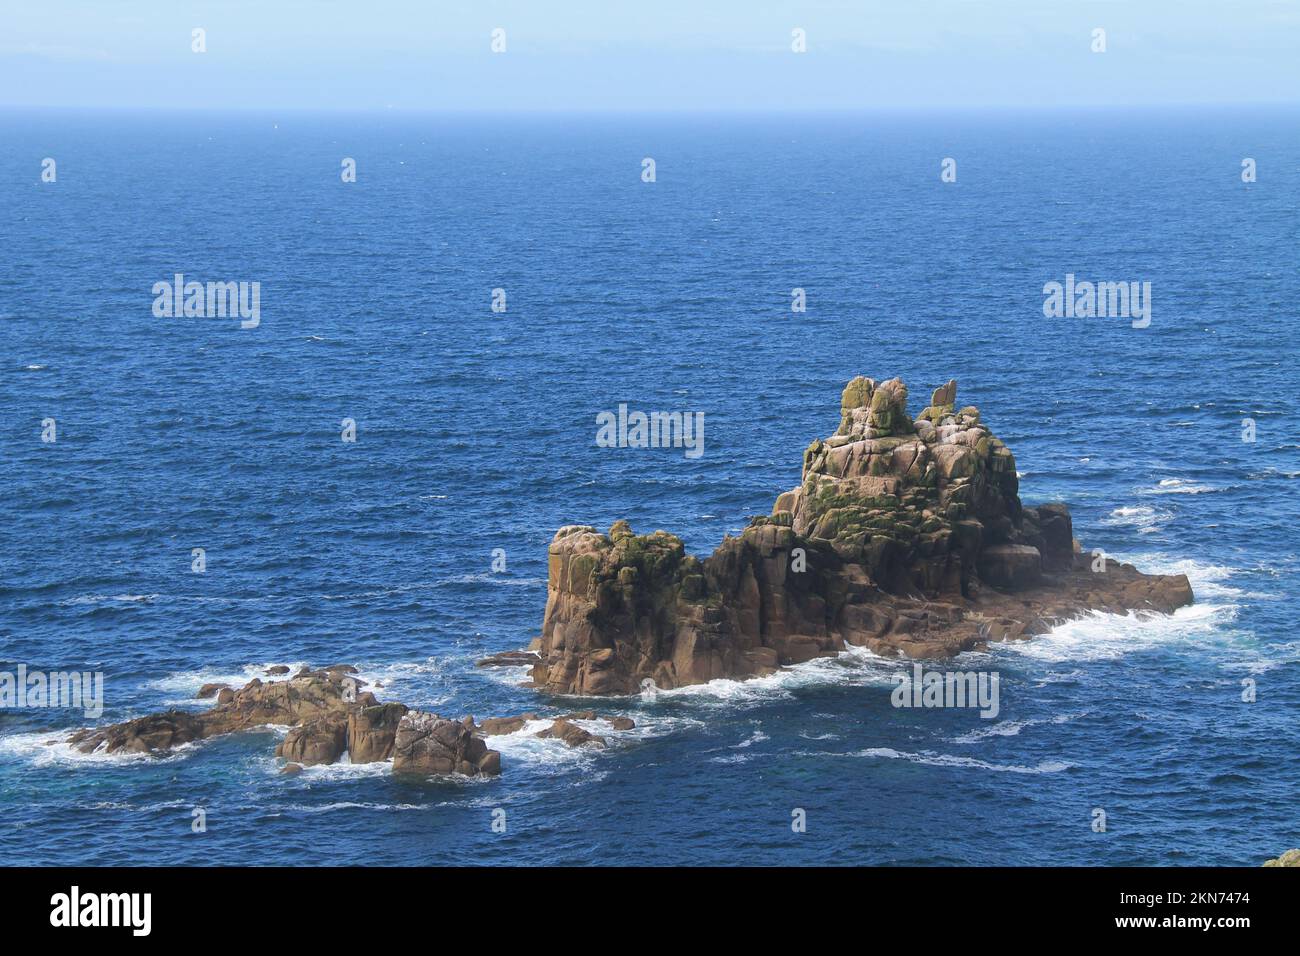 A Rocky Outcrop Island in the Sea. Stock Photo